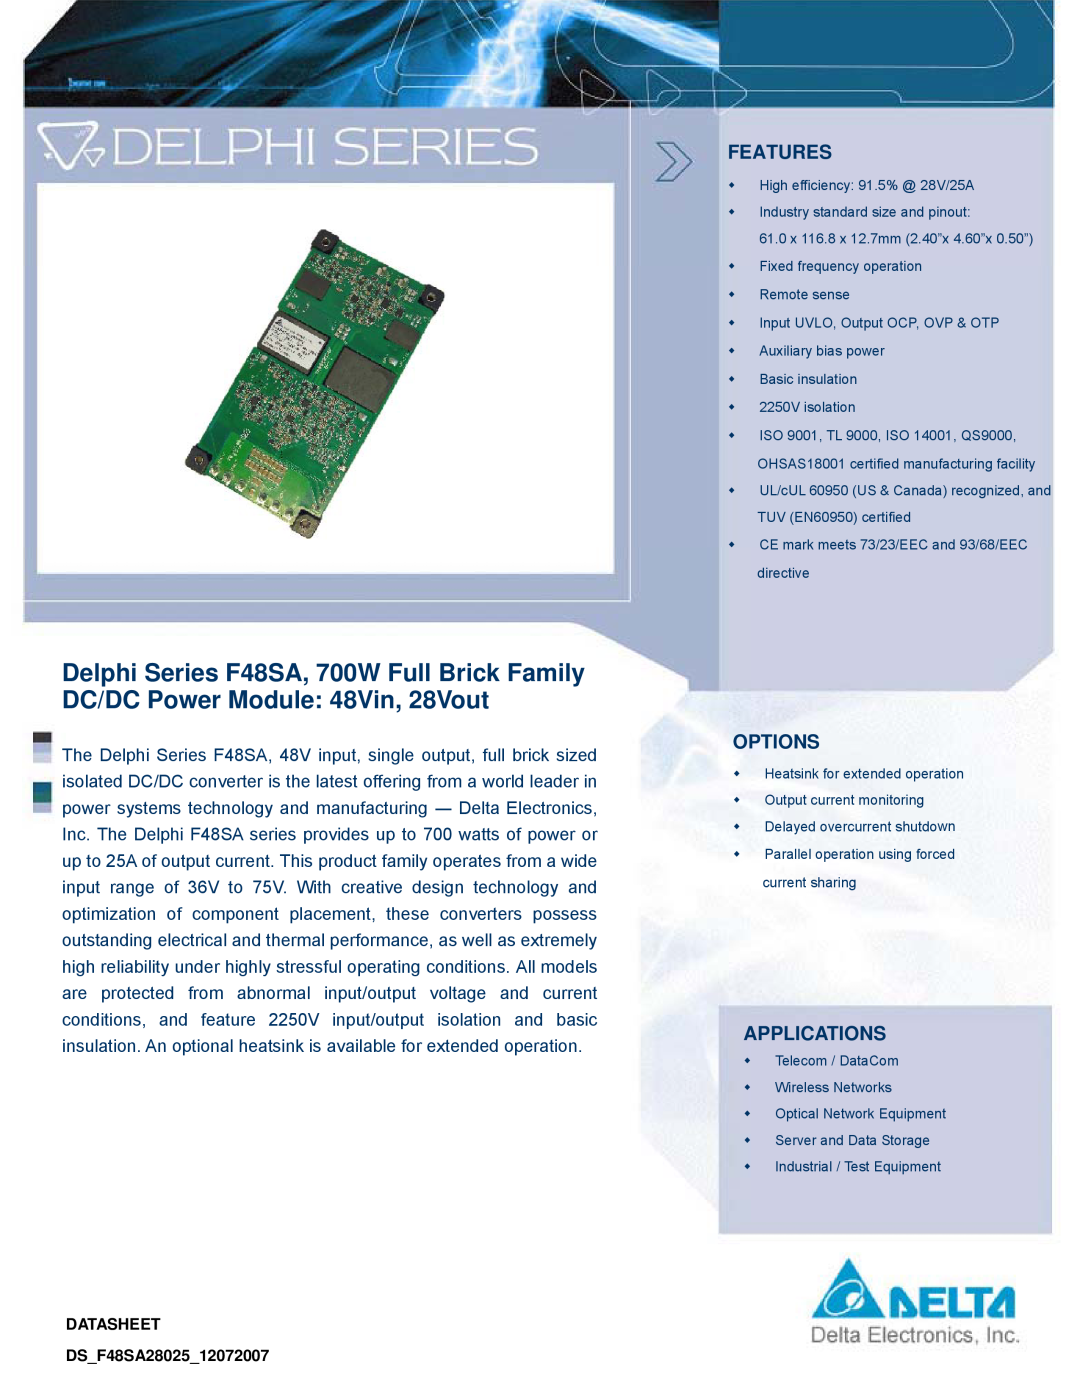 Delta Electronics manual Features, Options, Applications, DATASHEET DSF48SA2802512072007 